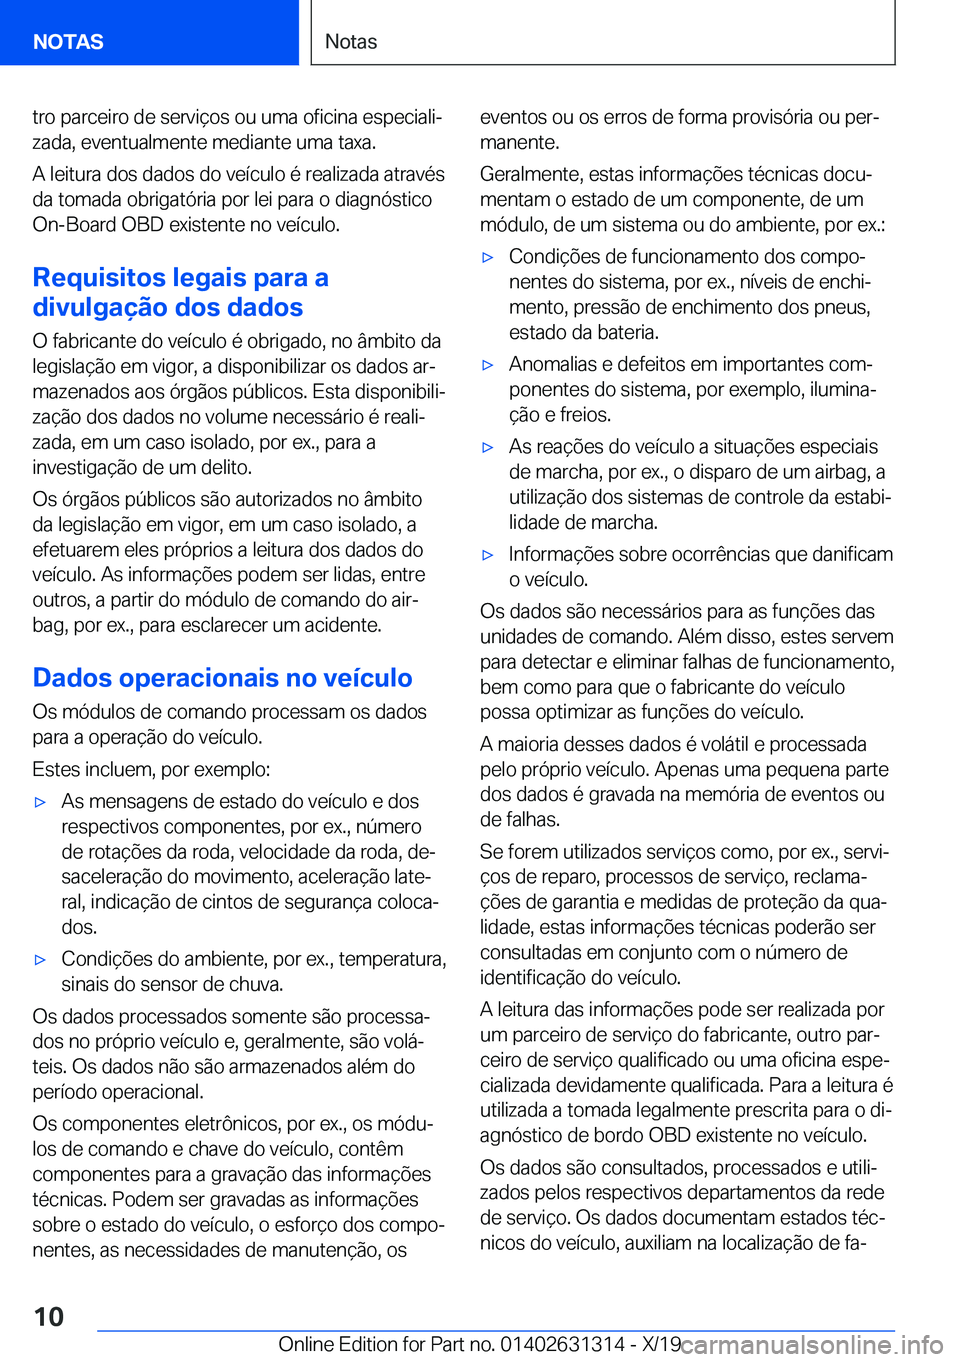 BMW M8 2020  Manual do condutor (in Portuguese) �t�r�o��p�a�r�c�e�i�r�o��d�e��s�e�r�v�i�